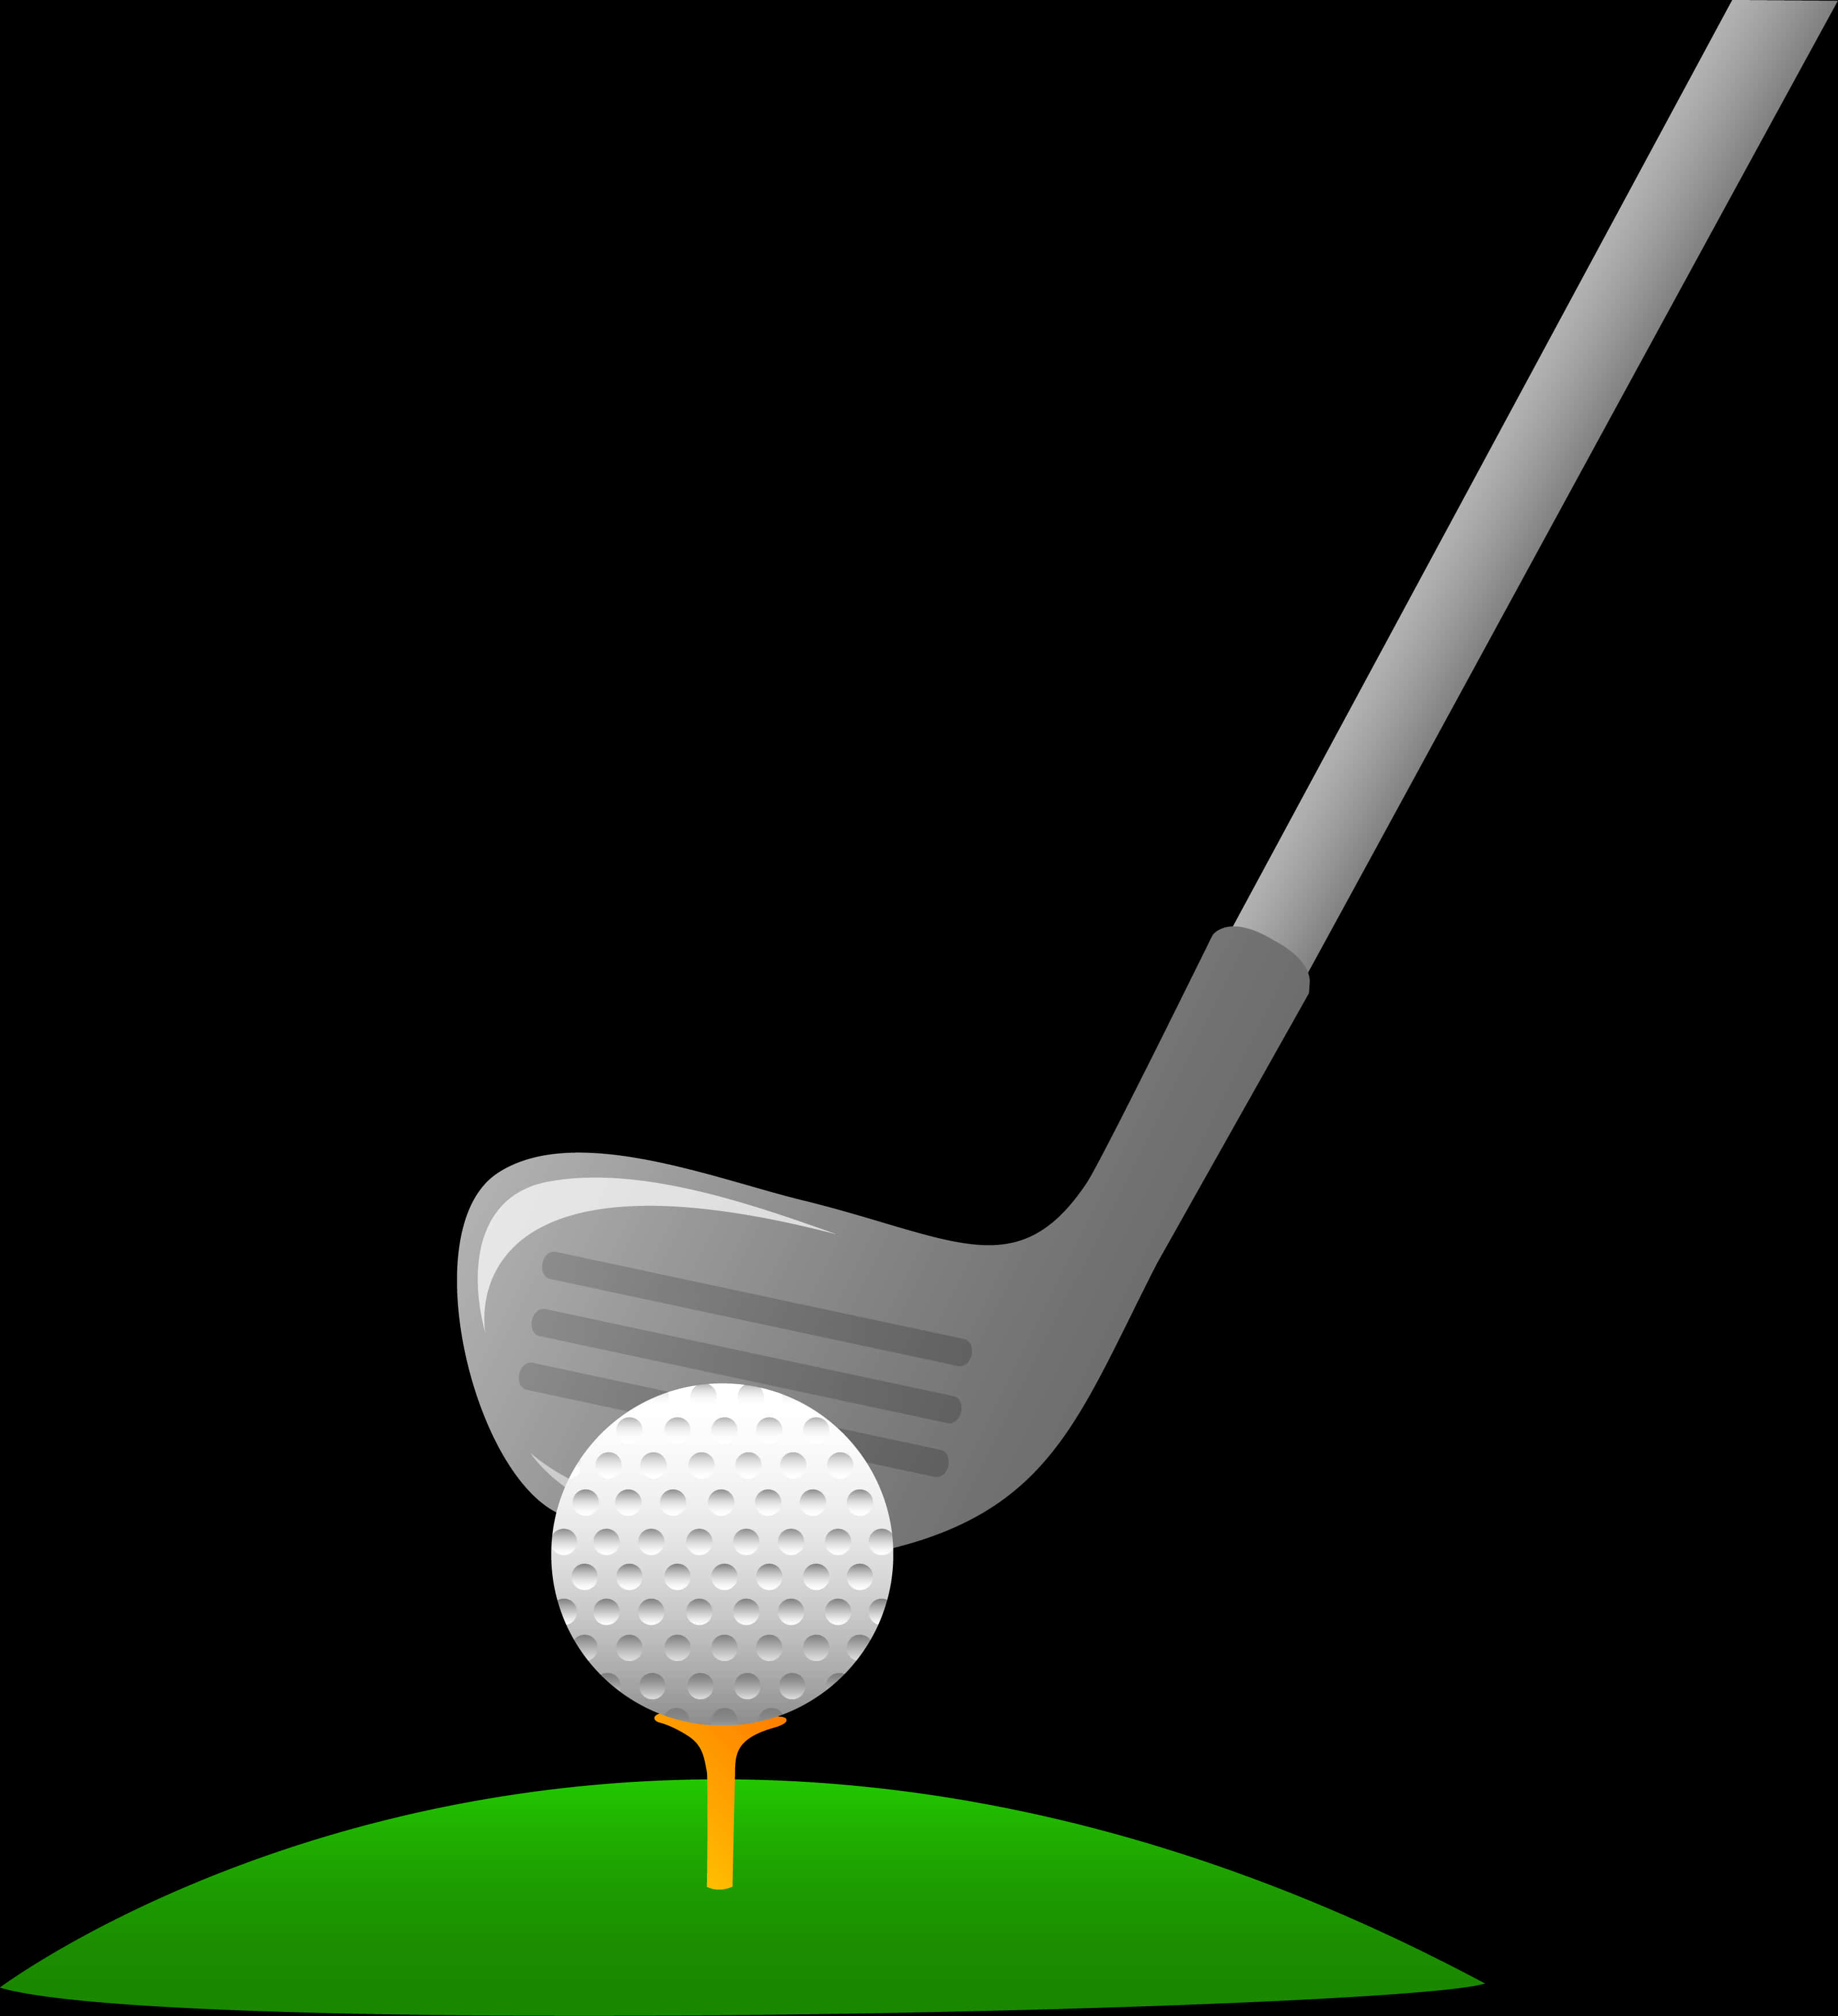 A Golf Club And Ball On A Tee